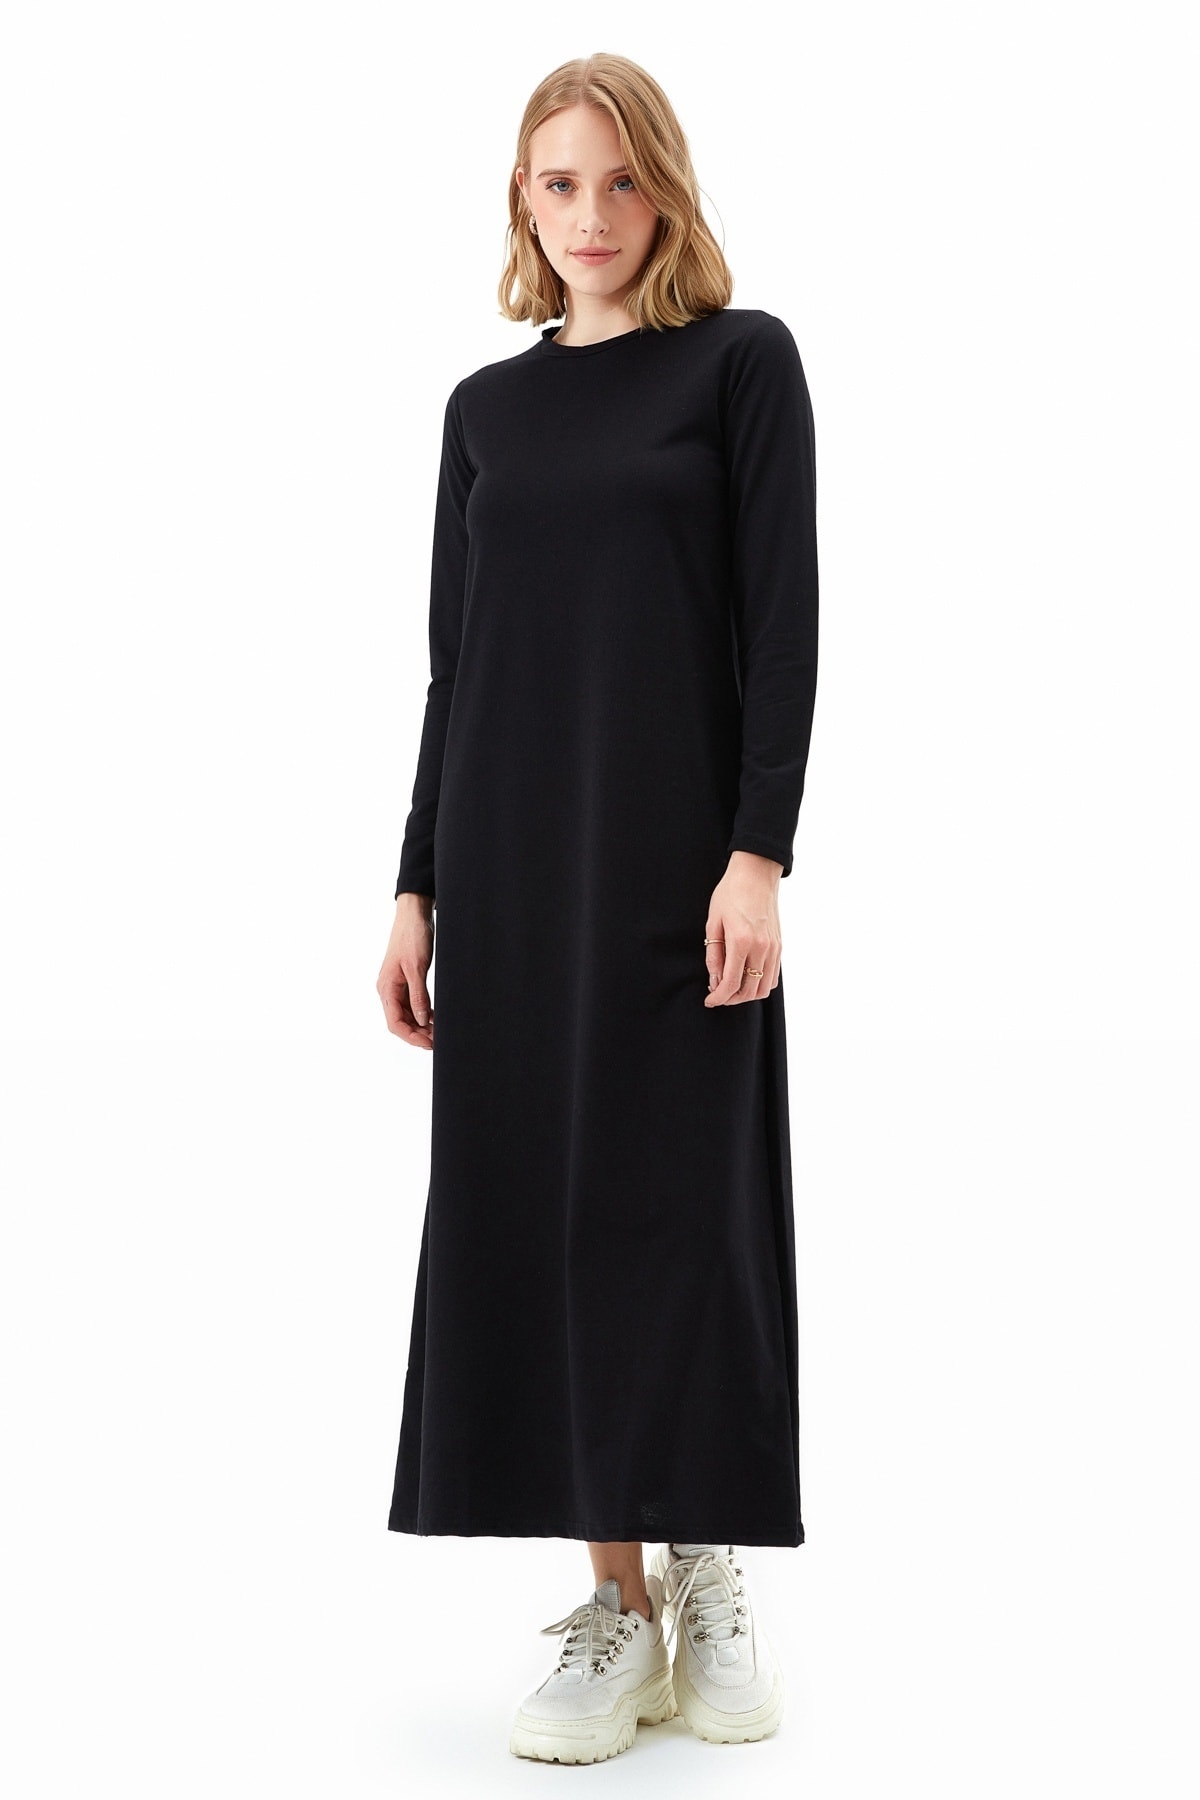 Doğal Kumaşlı Elbise-50424-siyah